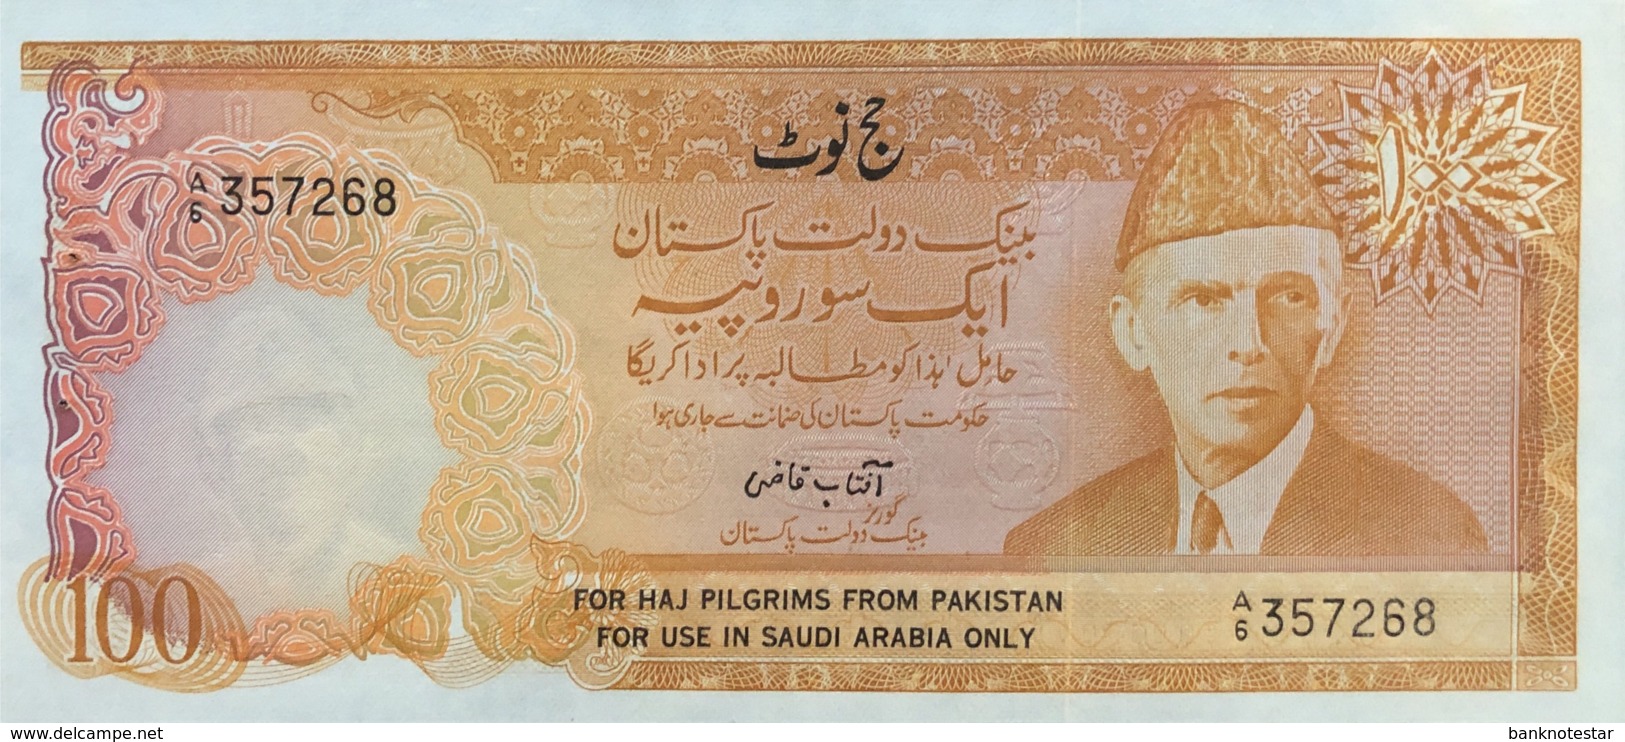 Pakistan 100 Rupees, P-R7 (1978)- UNC - HAJ Piligrim Banknote - Pakistan